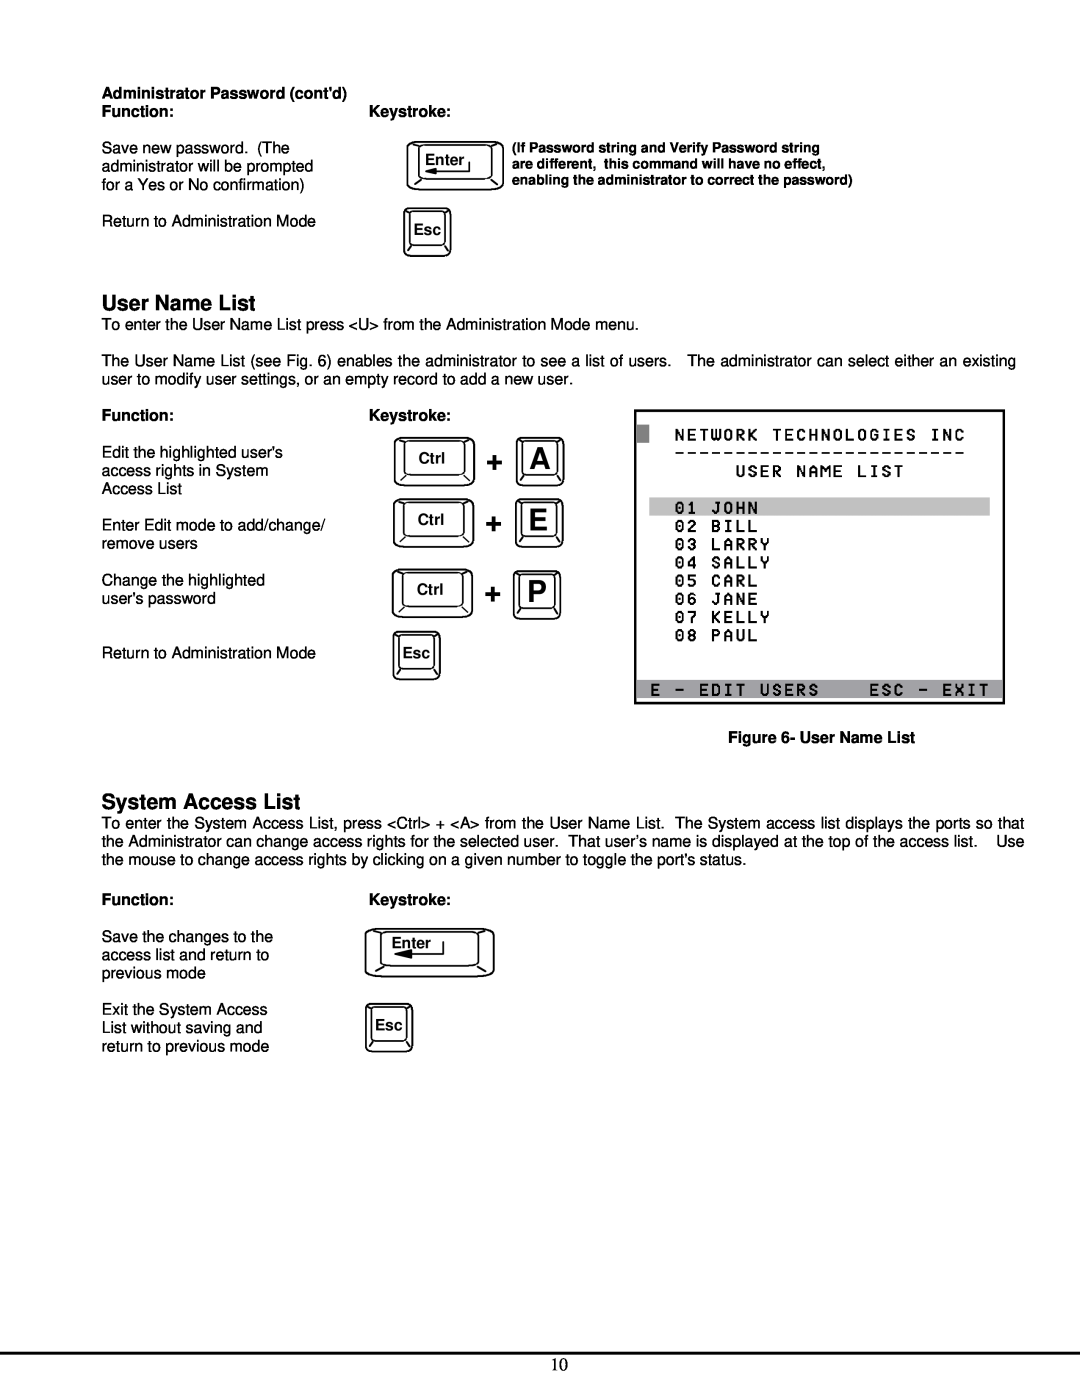 Network Technologies ST-NXM-U-HD manual + A + E + P, User Name List, System Access List 